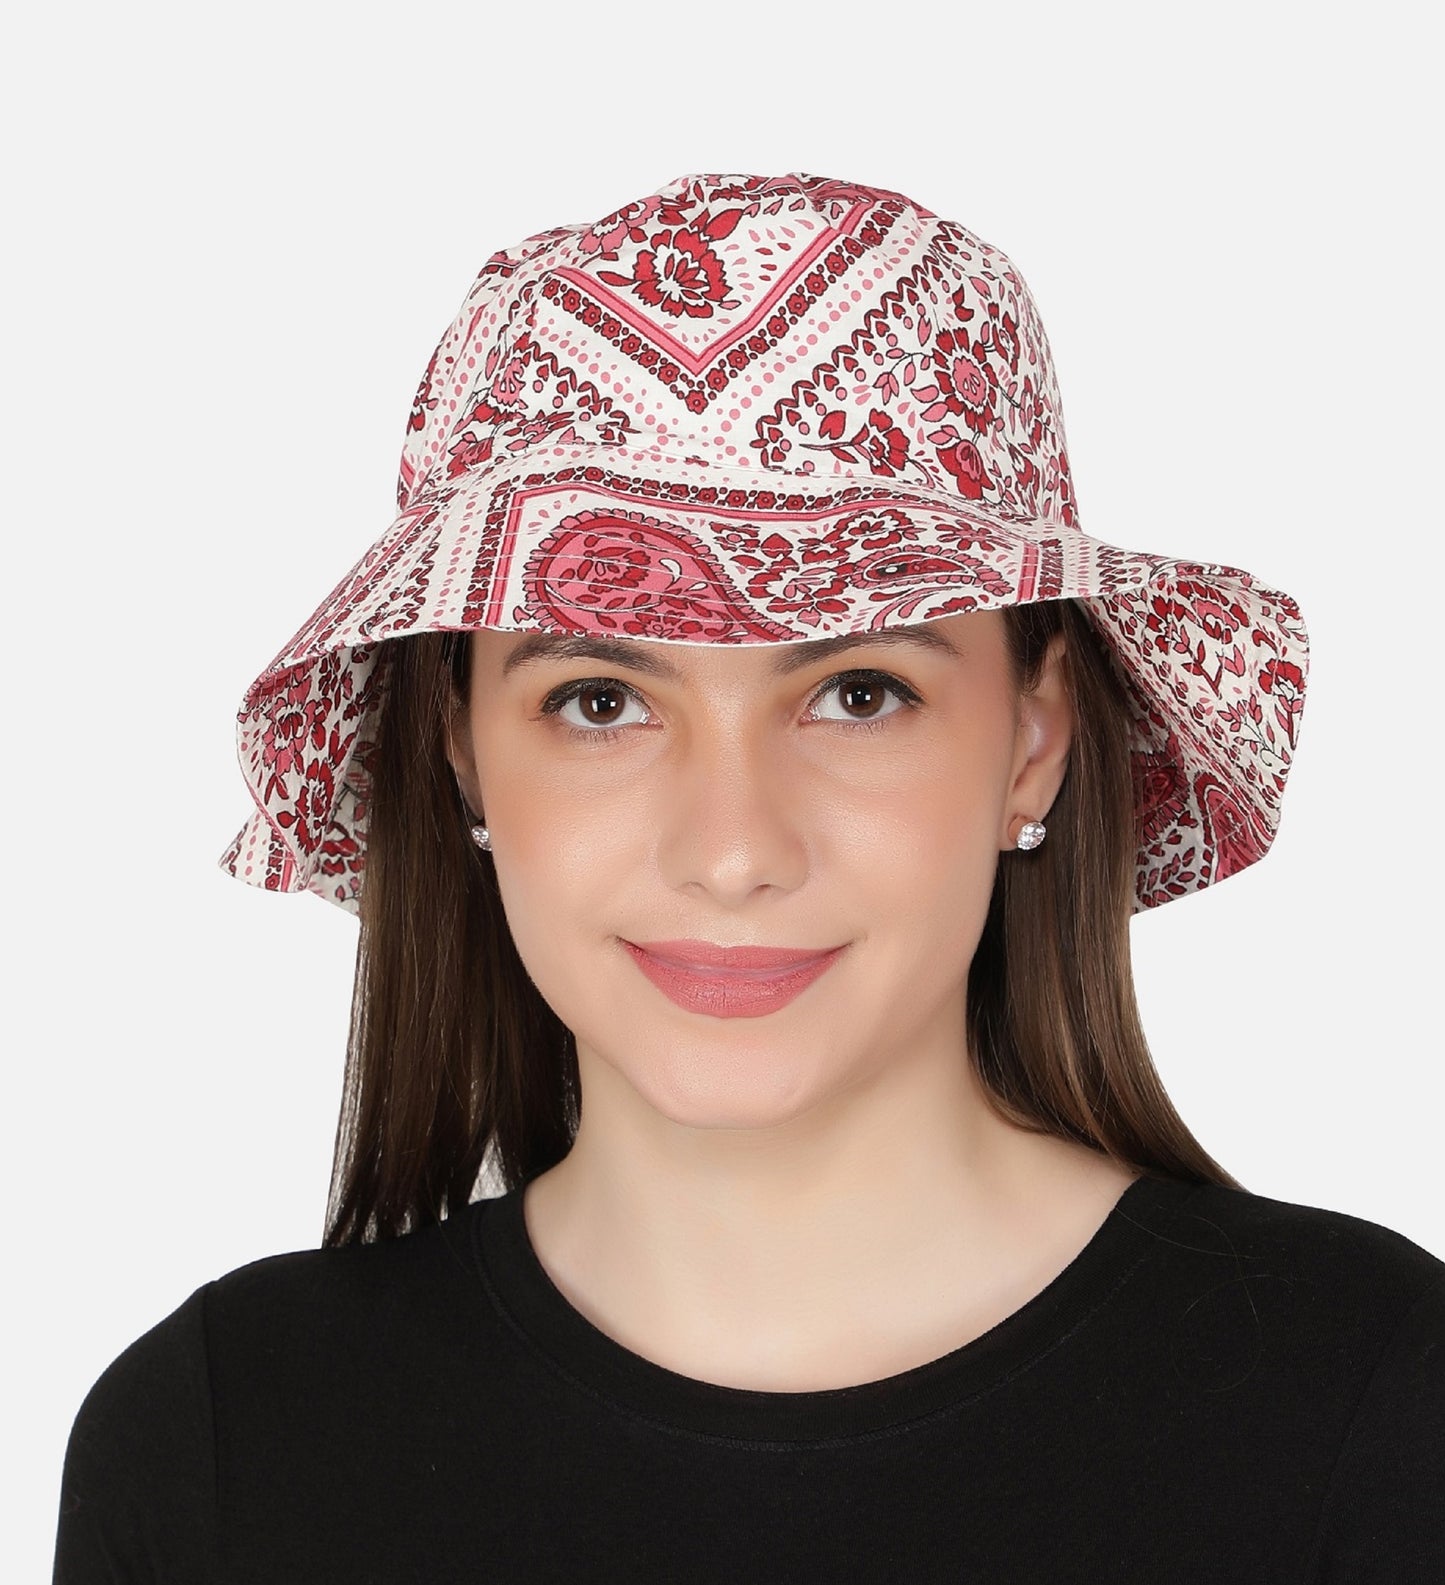 NUEVOSDAMAS Women Cotton Floral Printed Sun Hat